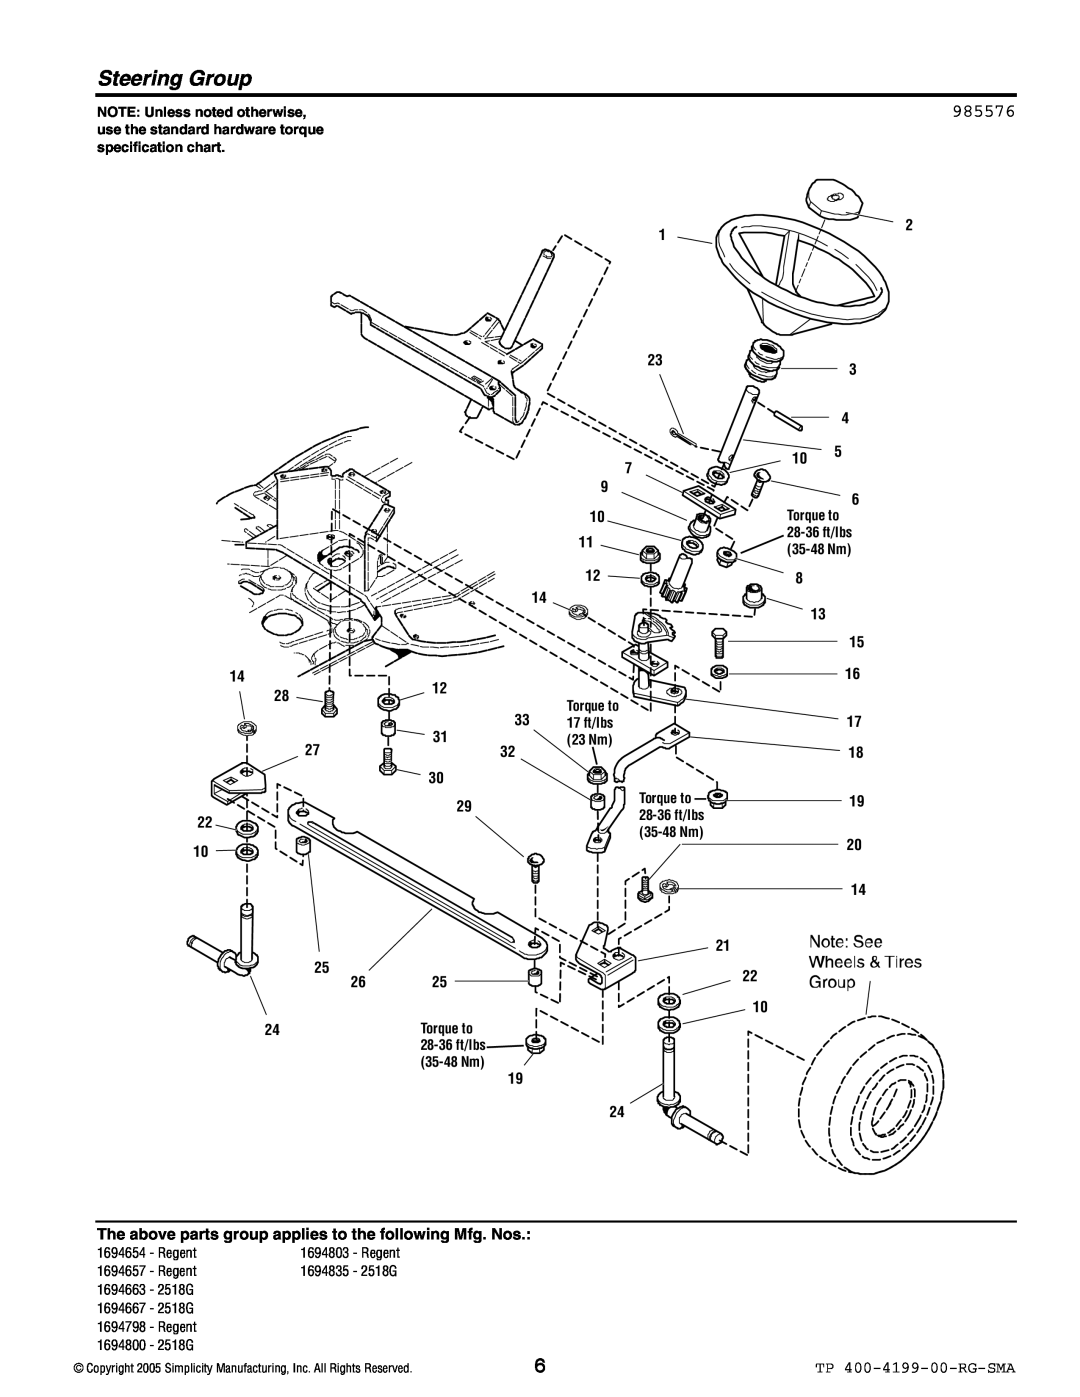 Snapper 2500 Series manual Steering Group, 985576, TP 400-4199-00-RG-SMA 